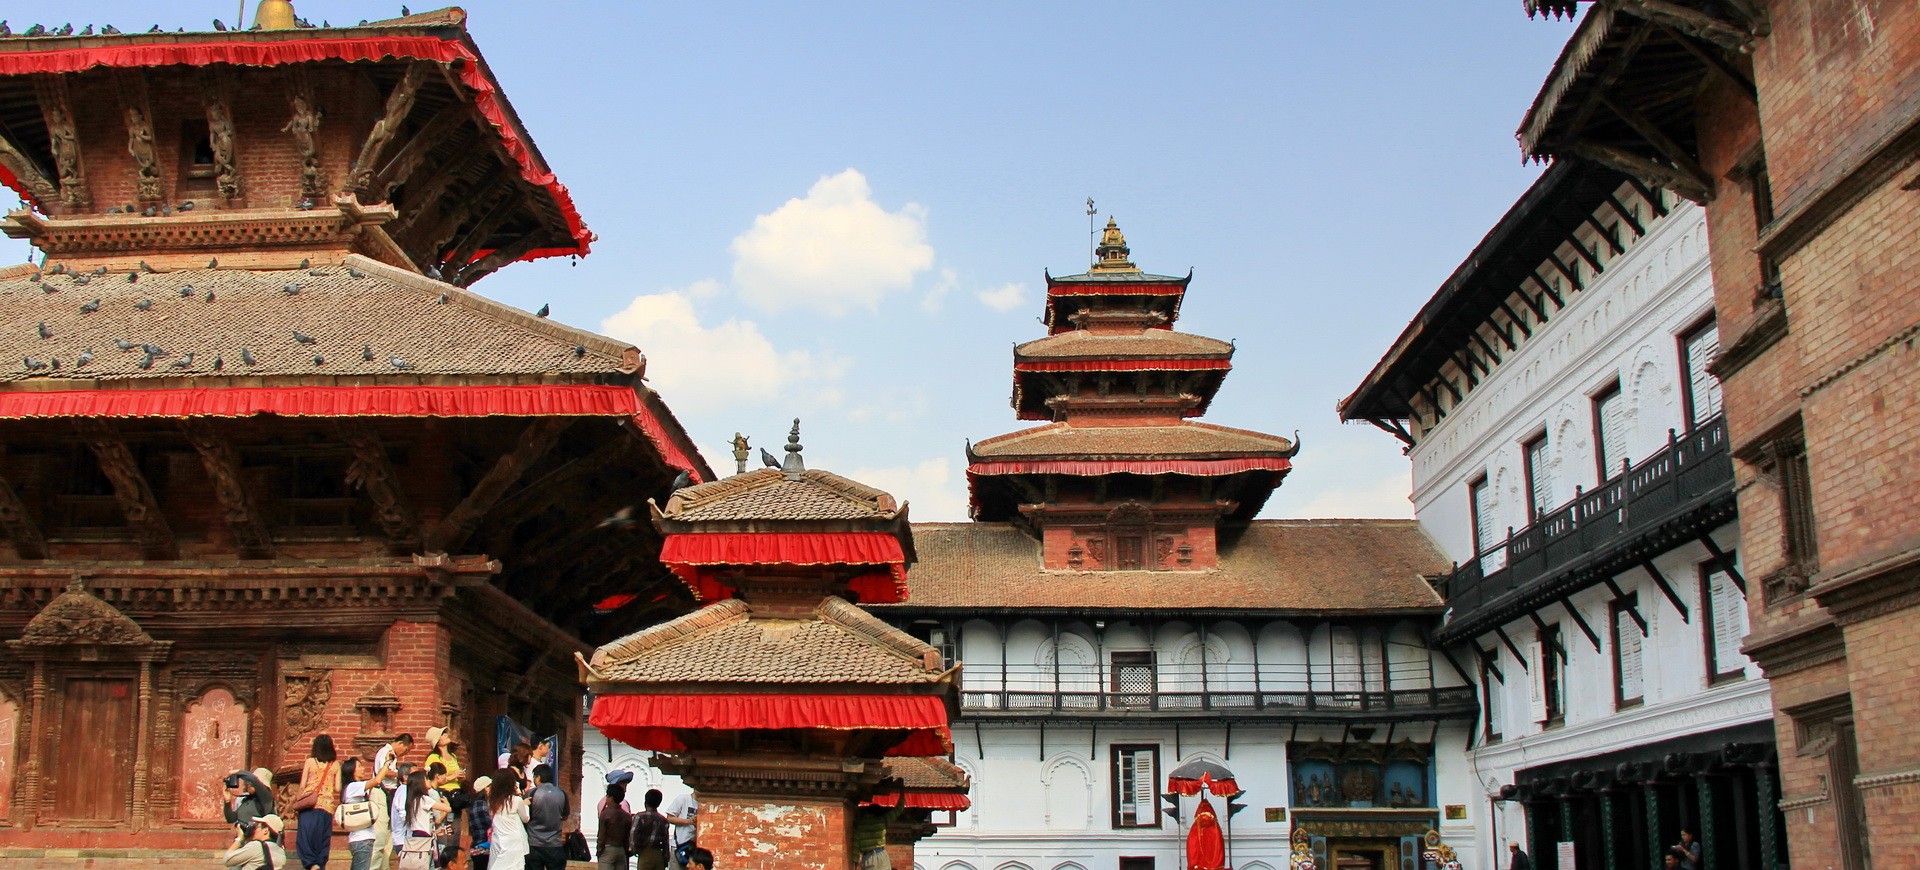 Népal Kathmandu Dubar Square